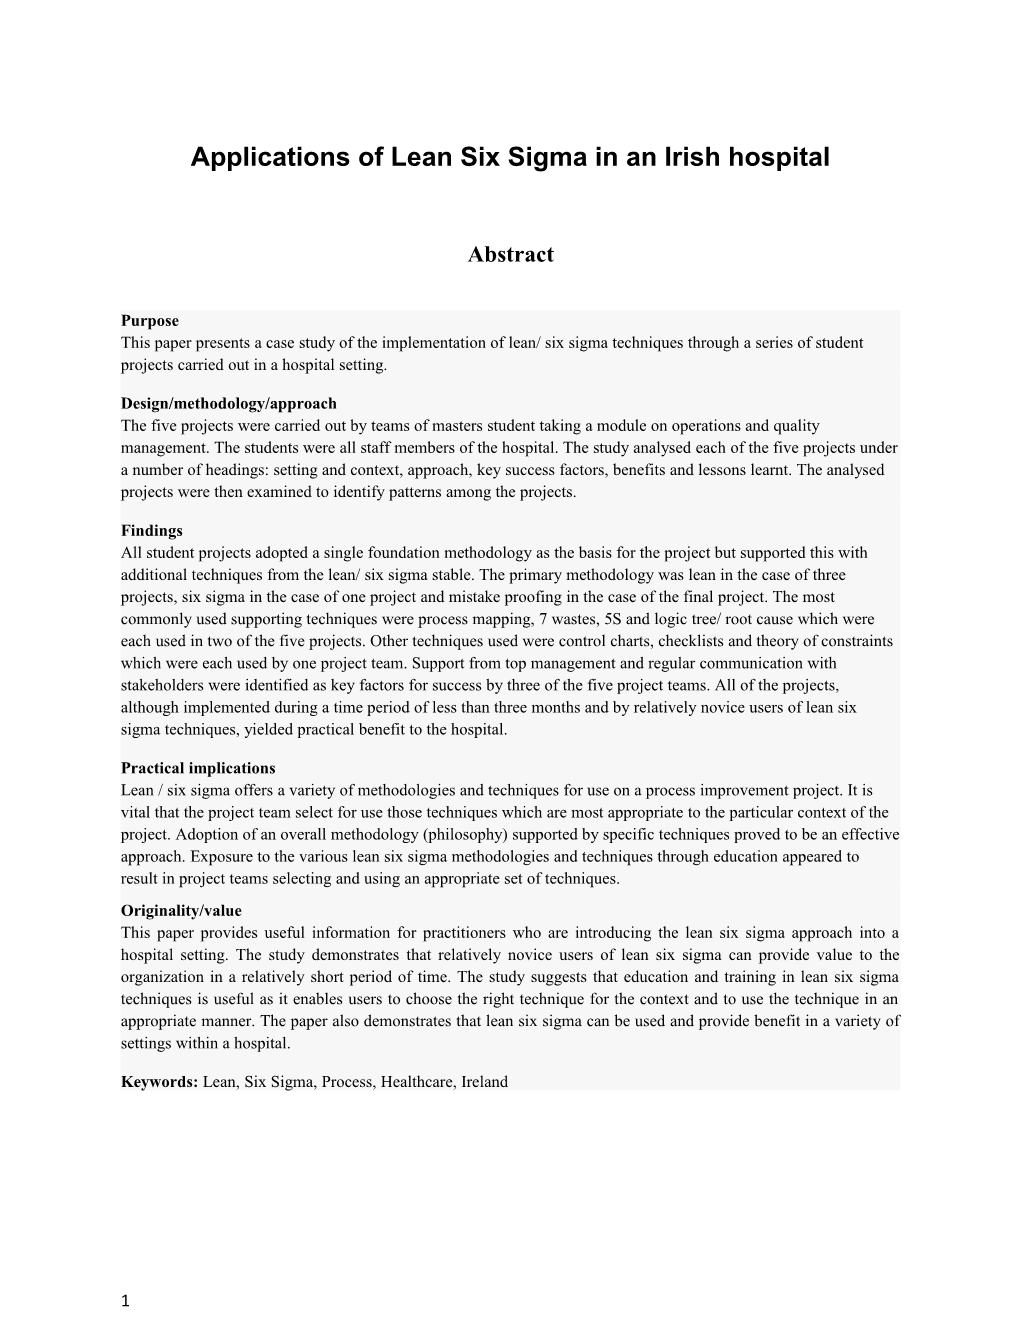 Lean Six Sigma in Healthcare Multiple Case Studies in an Irish Hospital